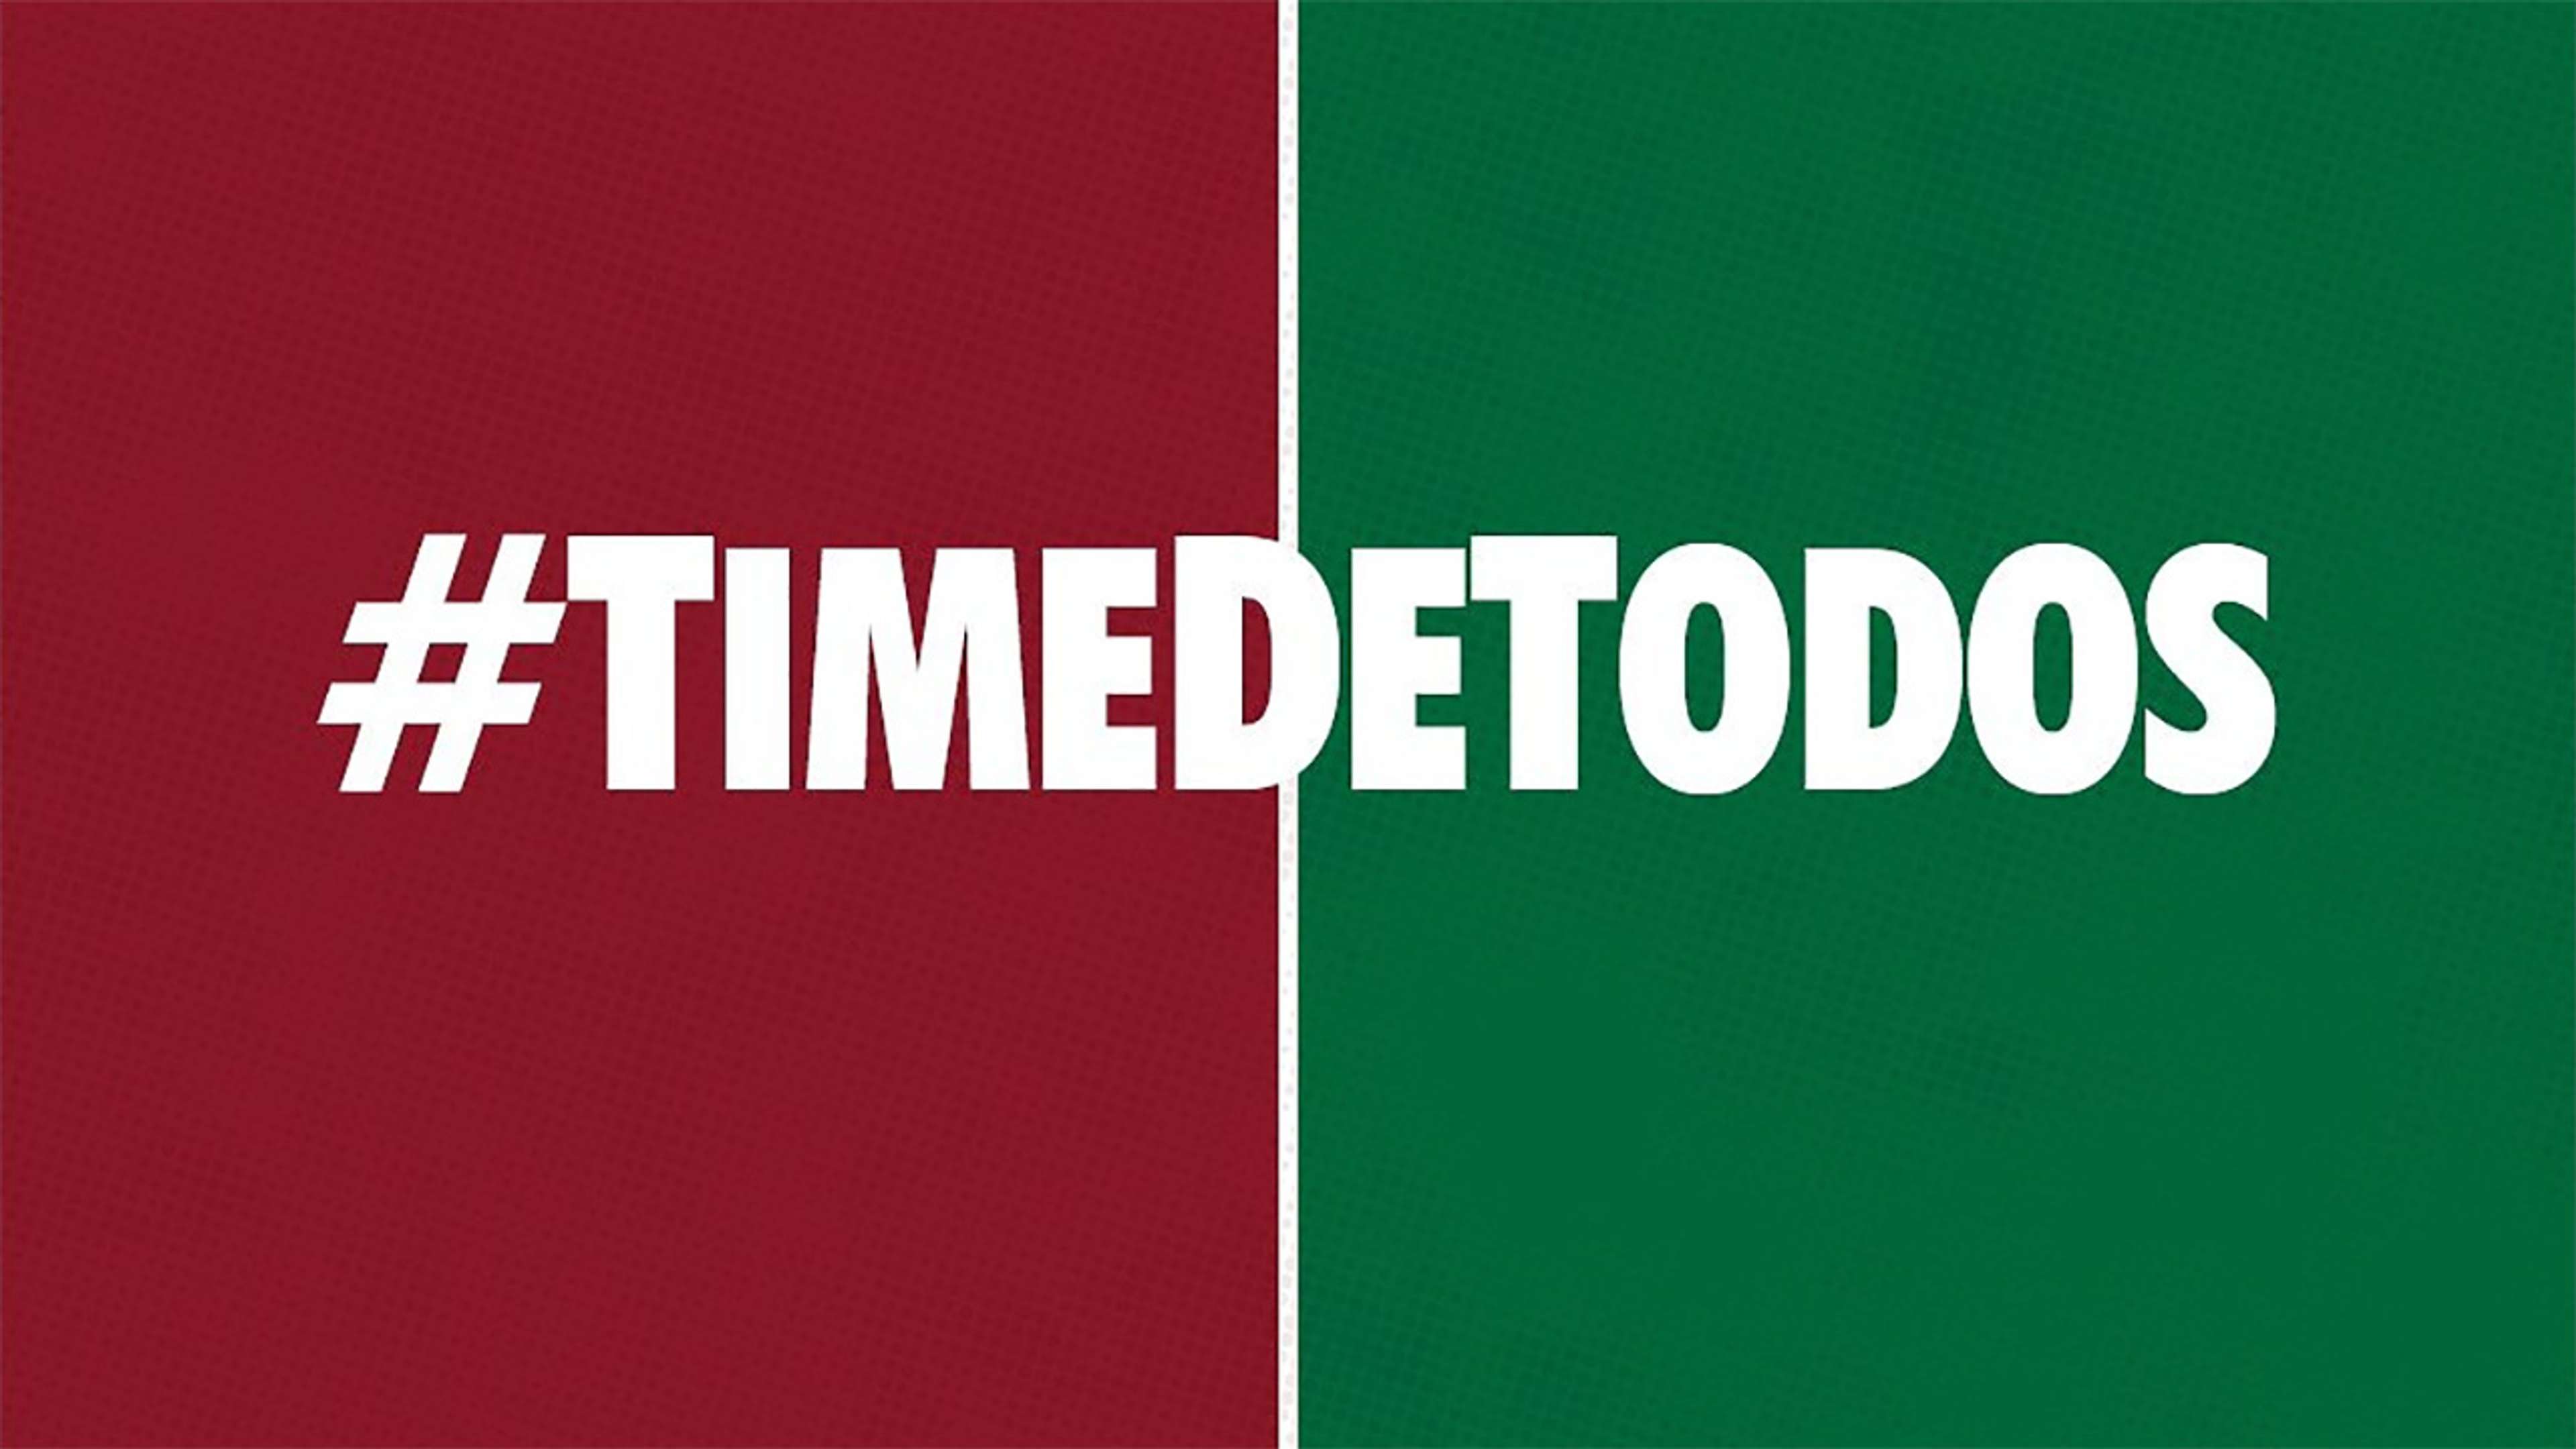 Fluminense #timedetodos 2019